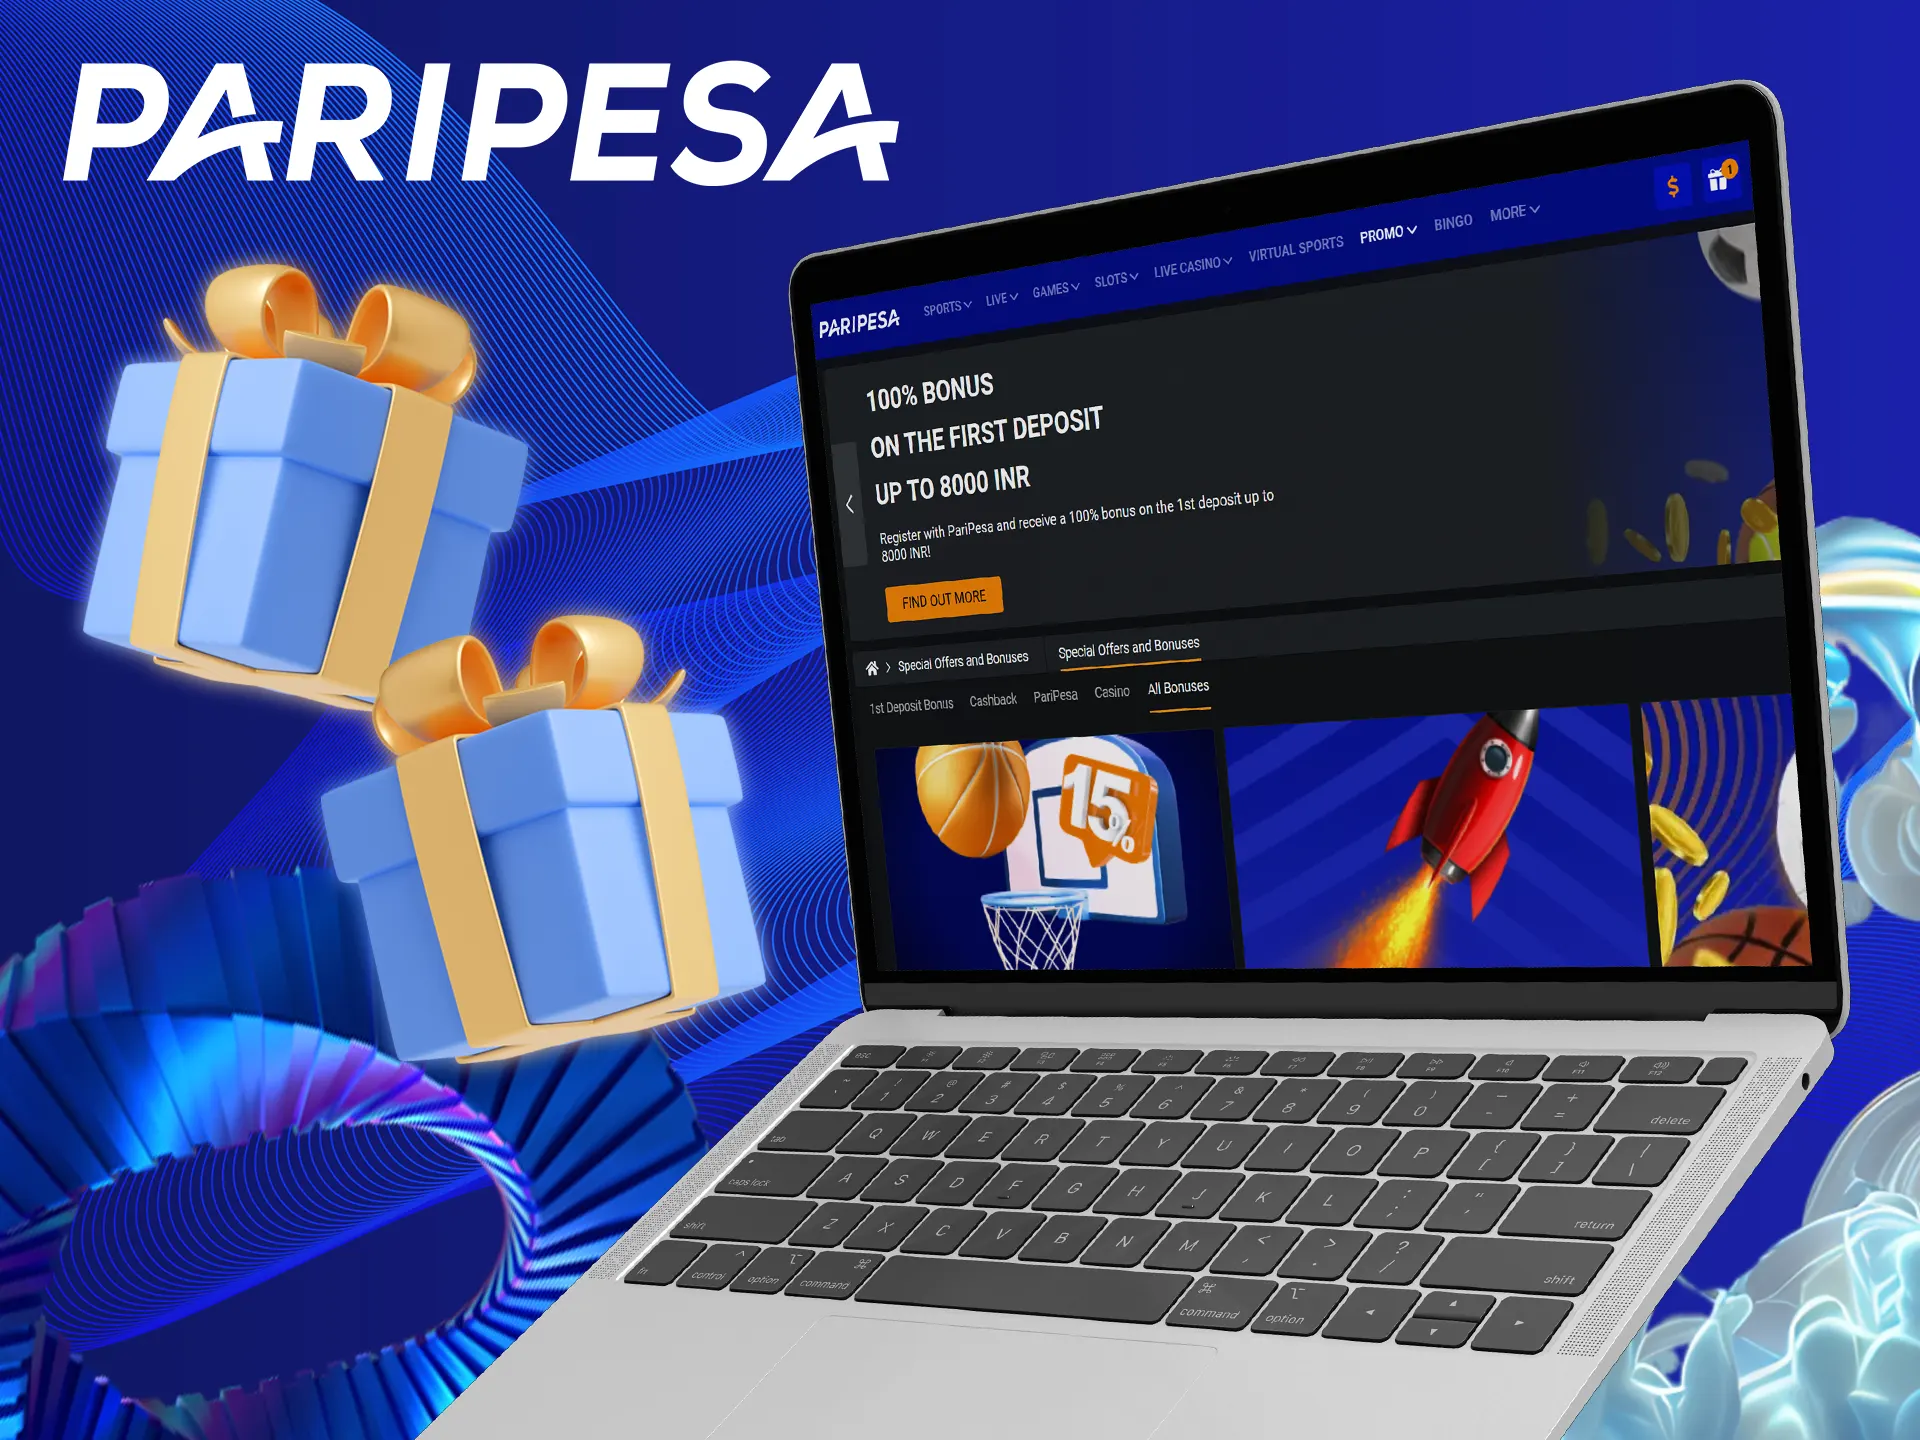 Claim your registration bonus after making new Paripesa account.